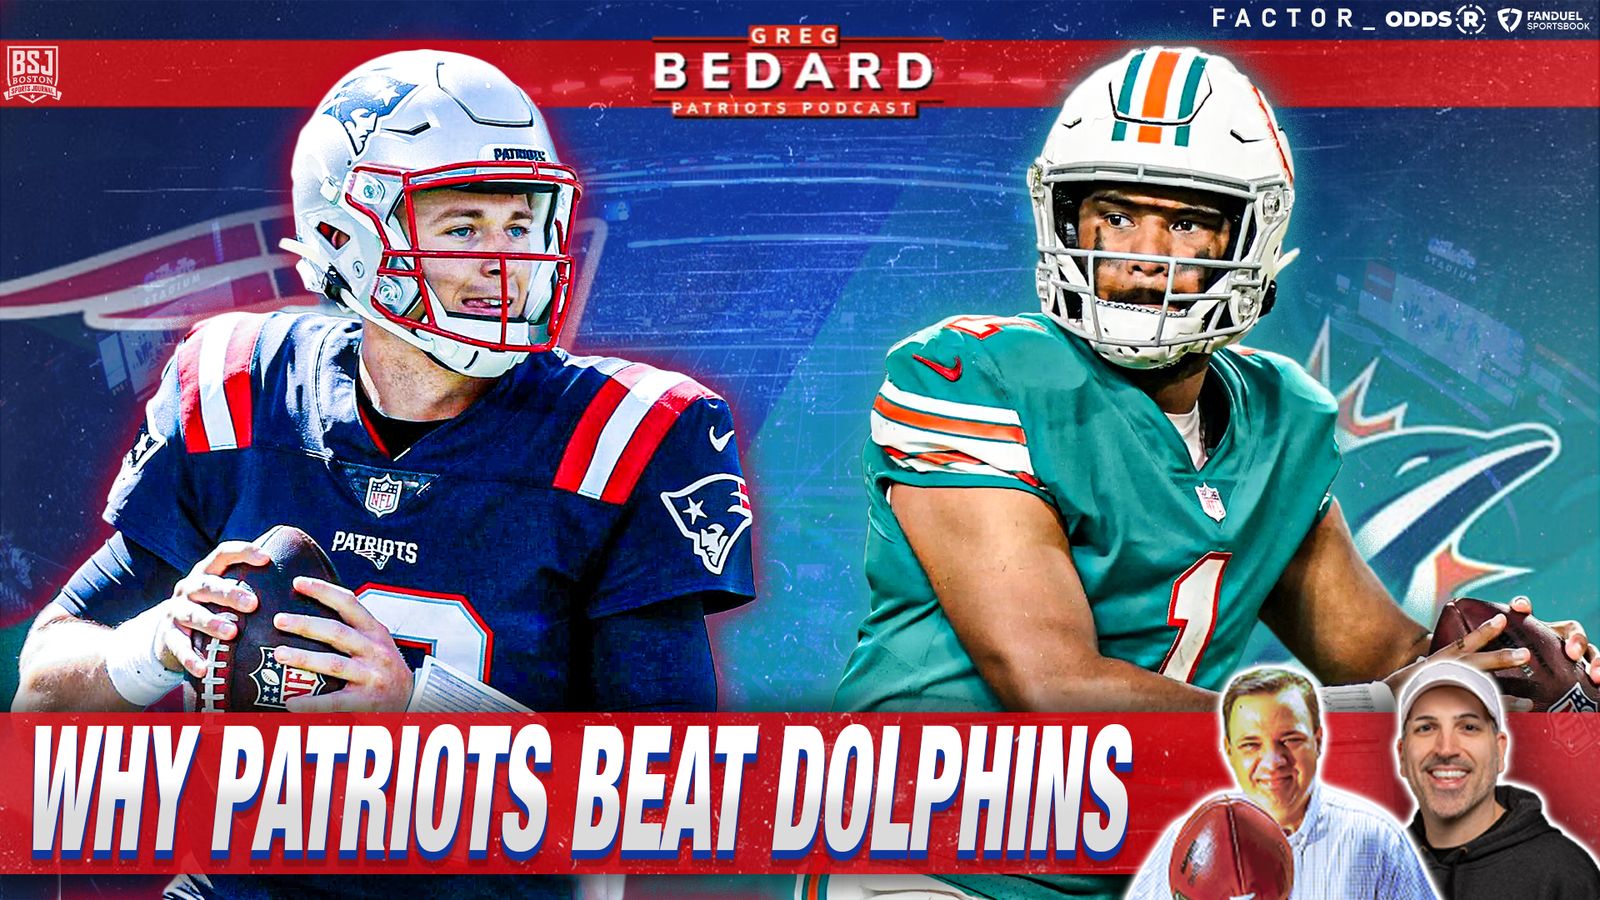 Podcast & Video: Bedard Patriots Pod - Why Patriots will beat the